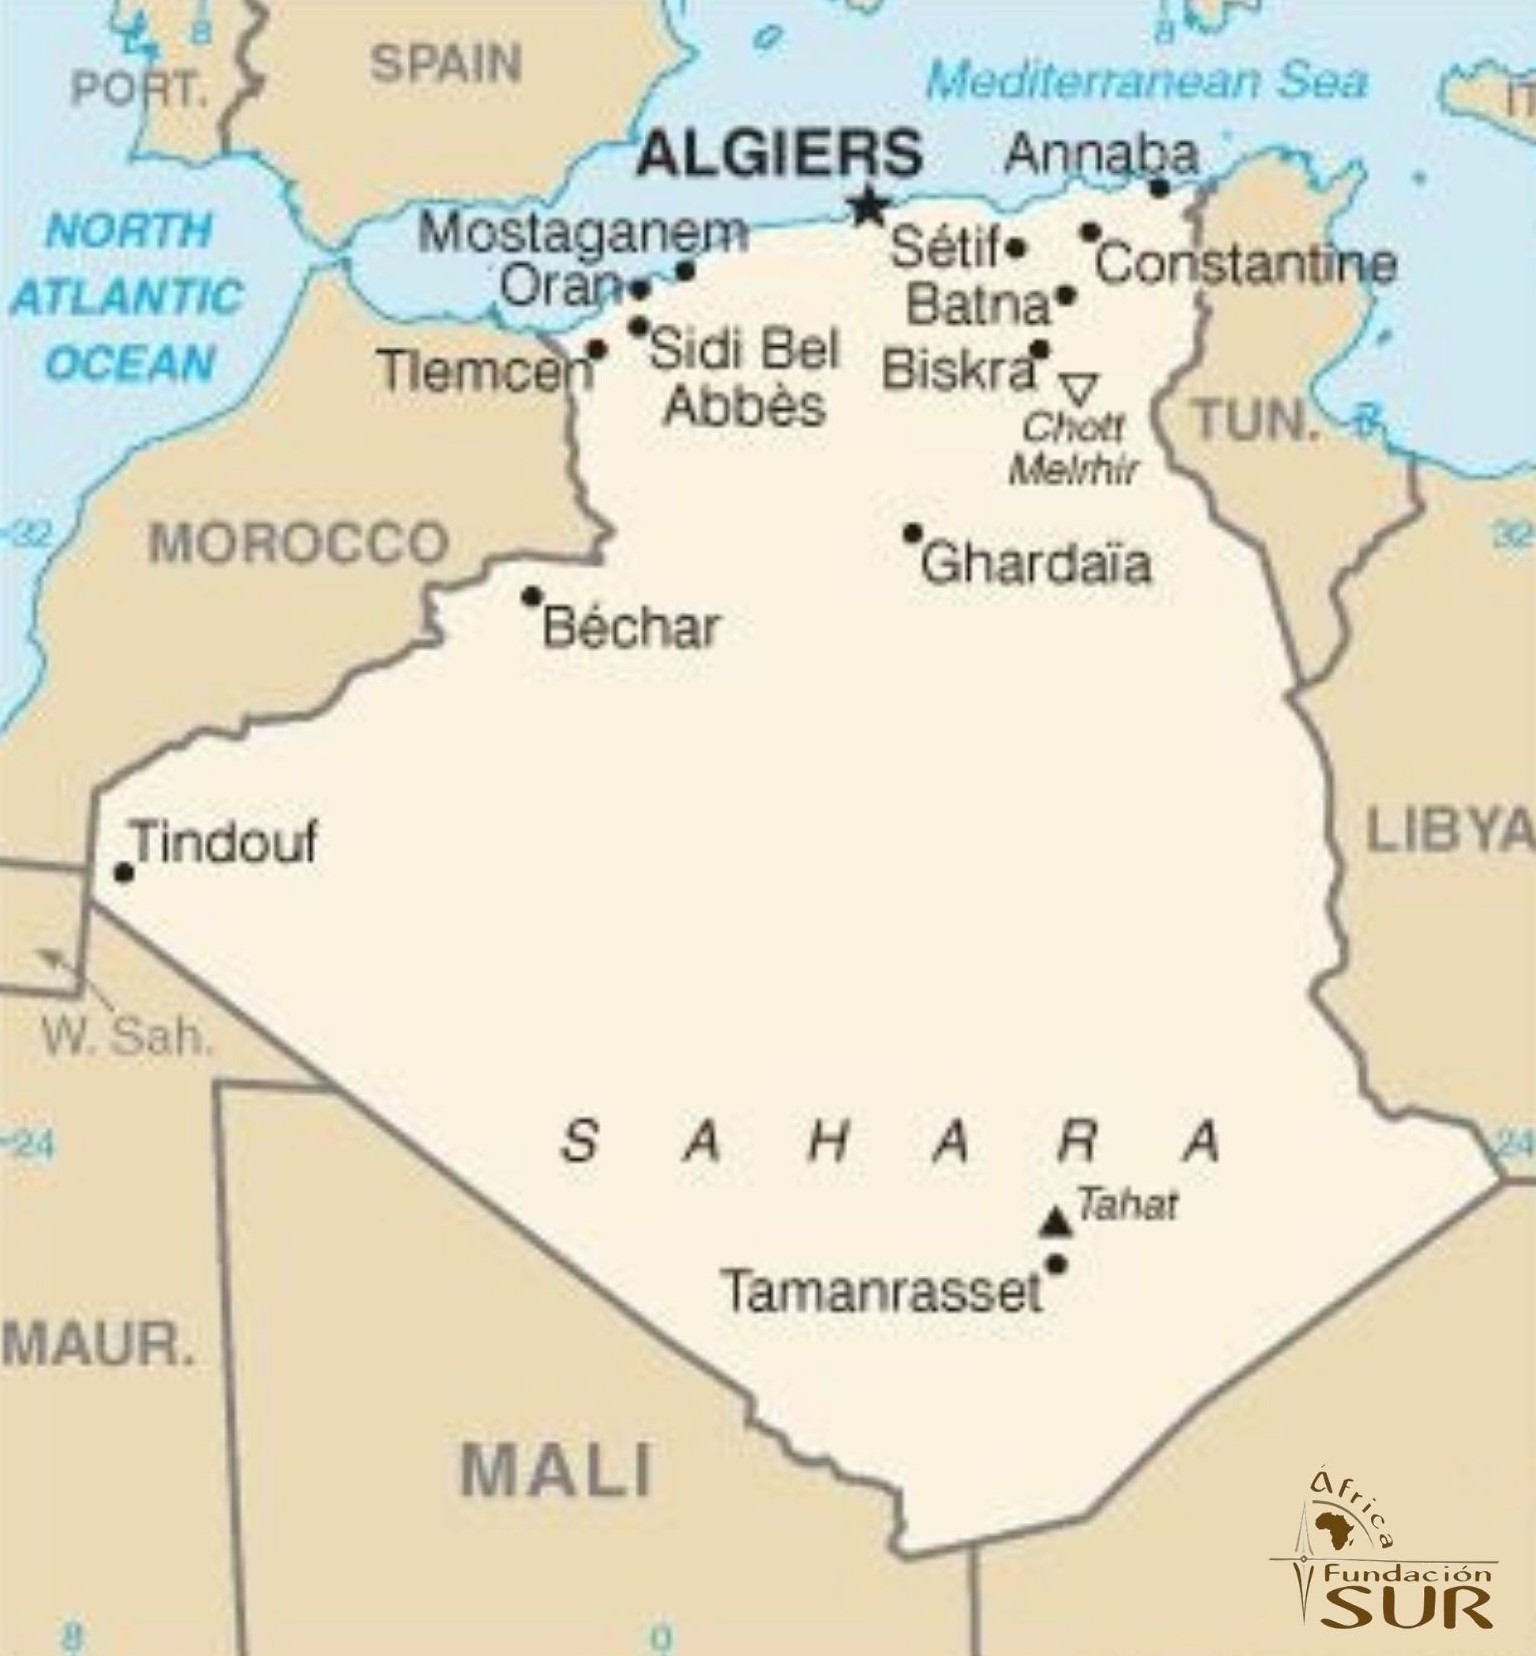 mapa_argelia_cc0-2.jpg